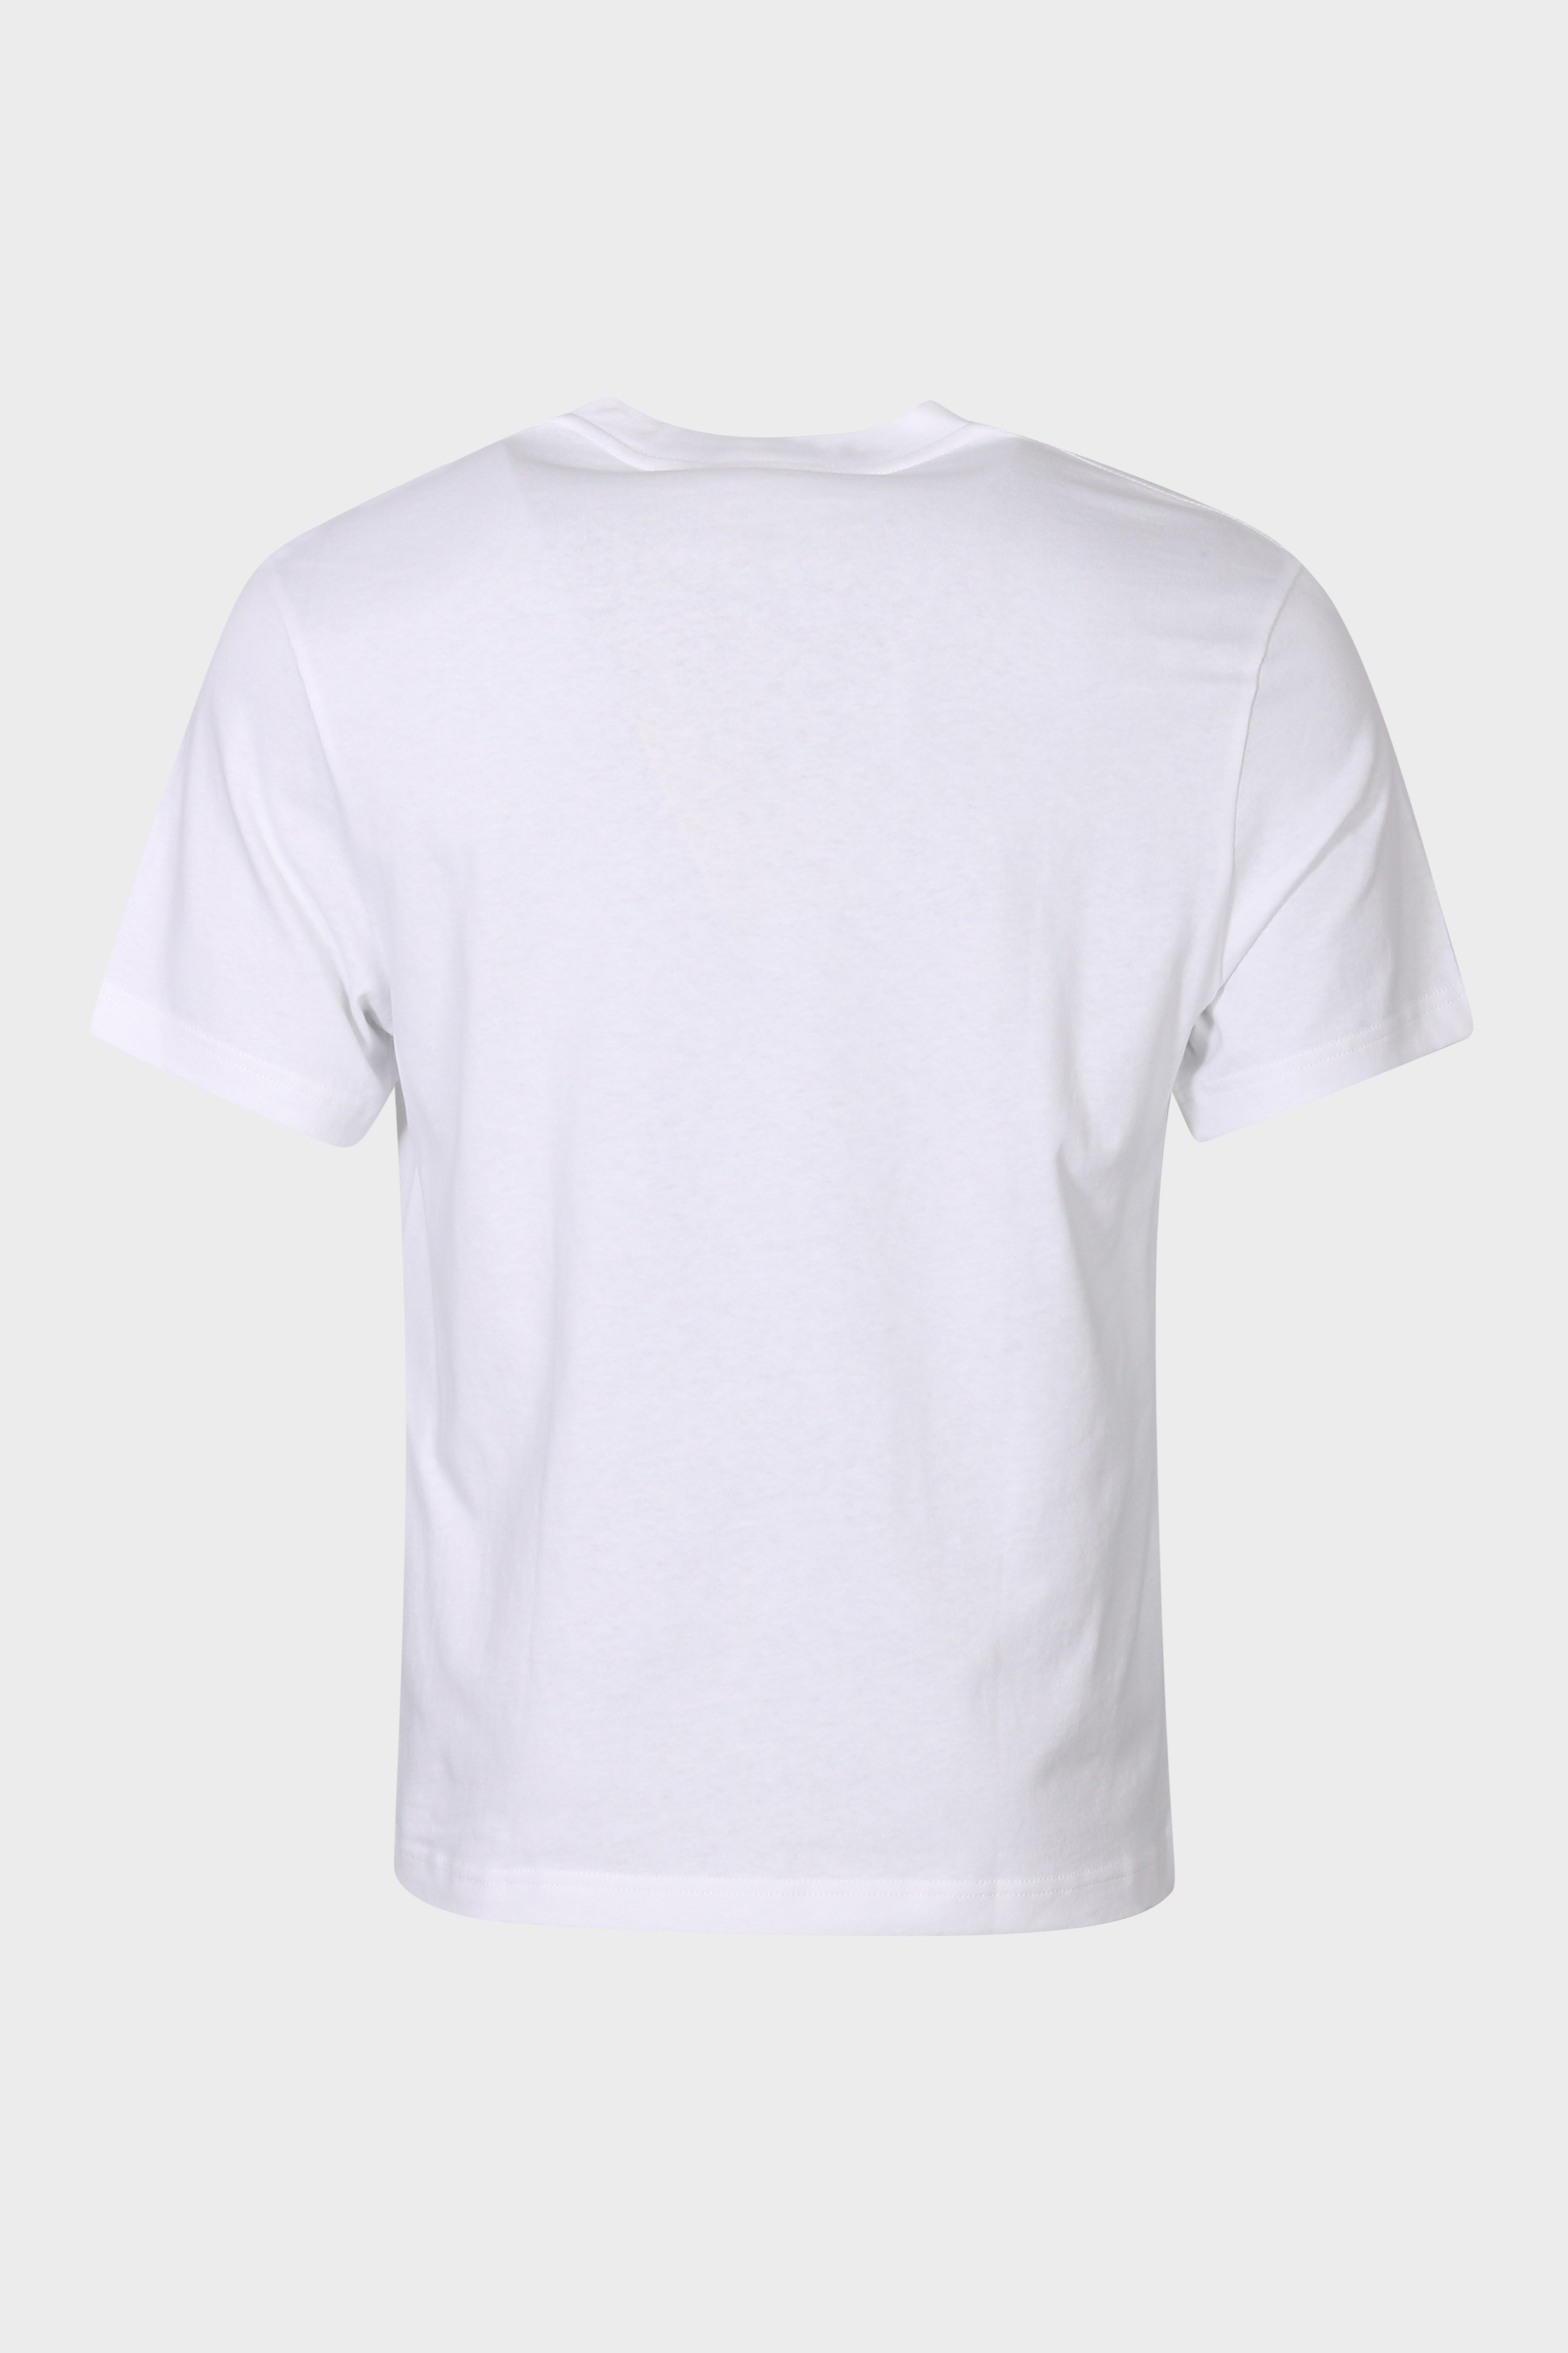 AXEL ARIGATO Legacy T-Shirt in White XL